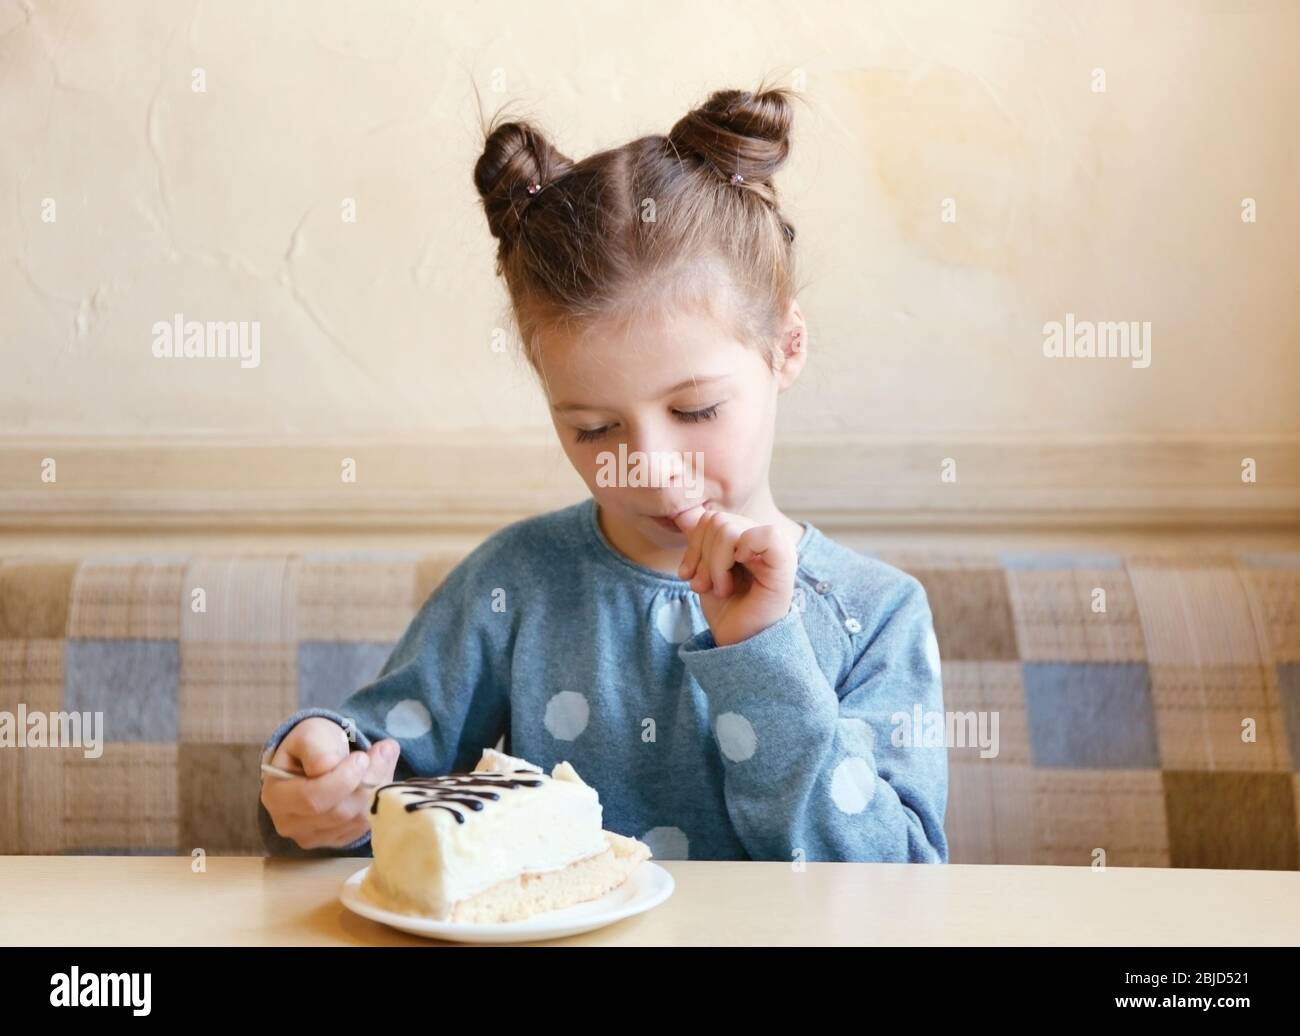 Cute little girl eating tasty cake in kitchen Stock Photo